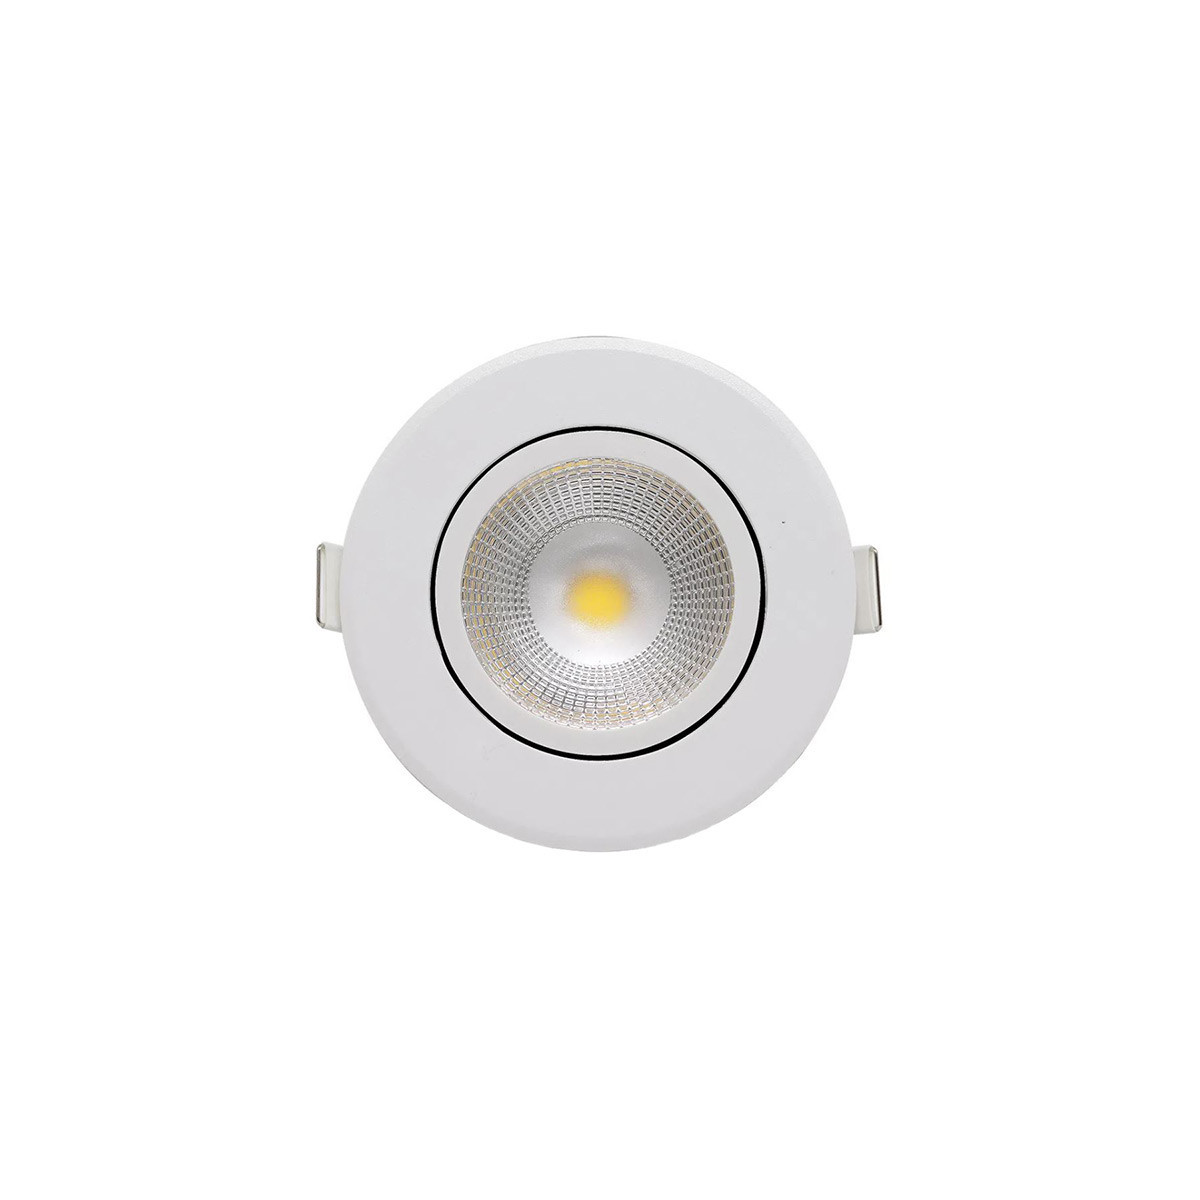 Einstellbares SPOT LED Downlight 5W